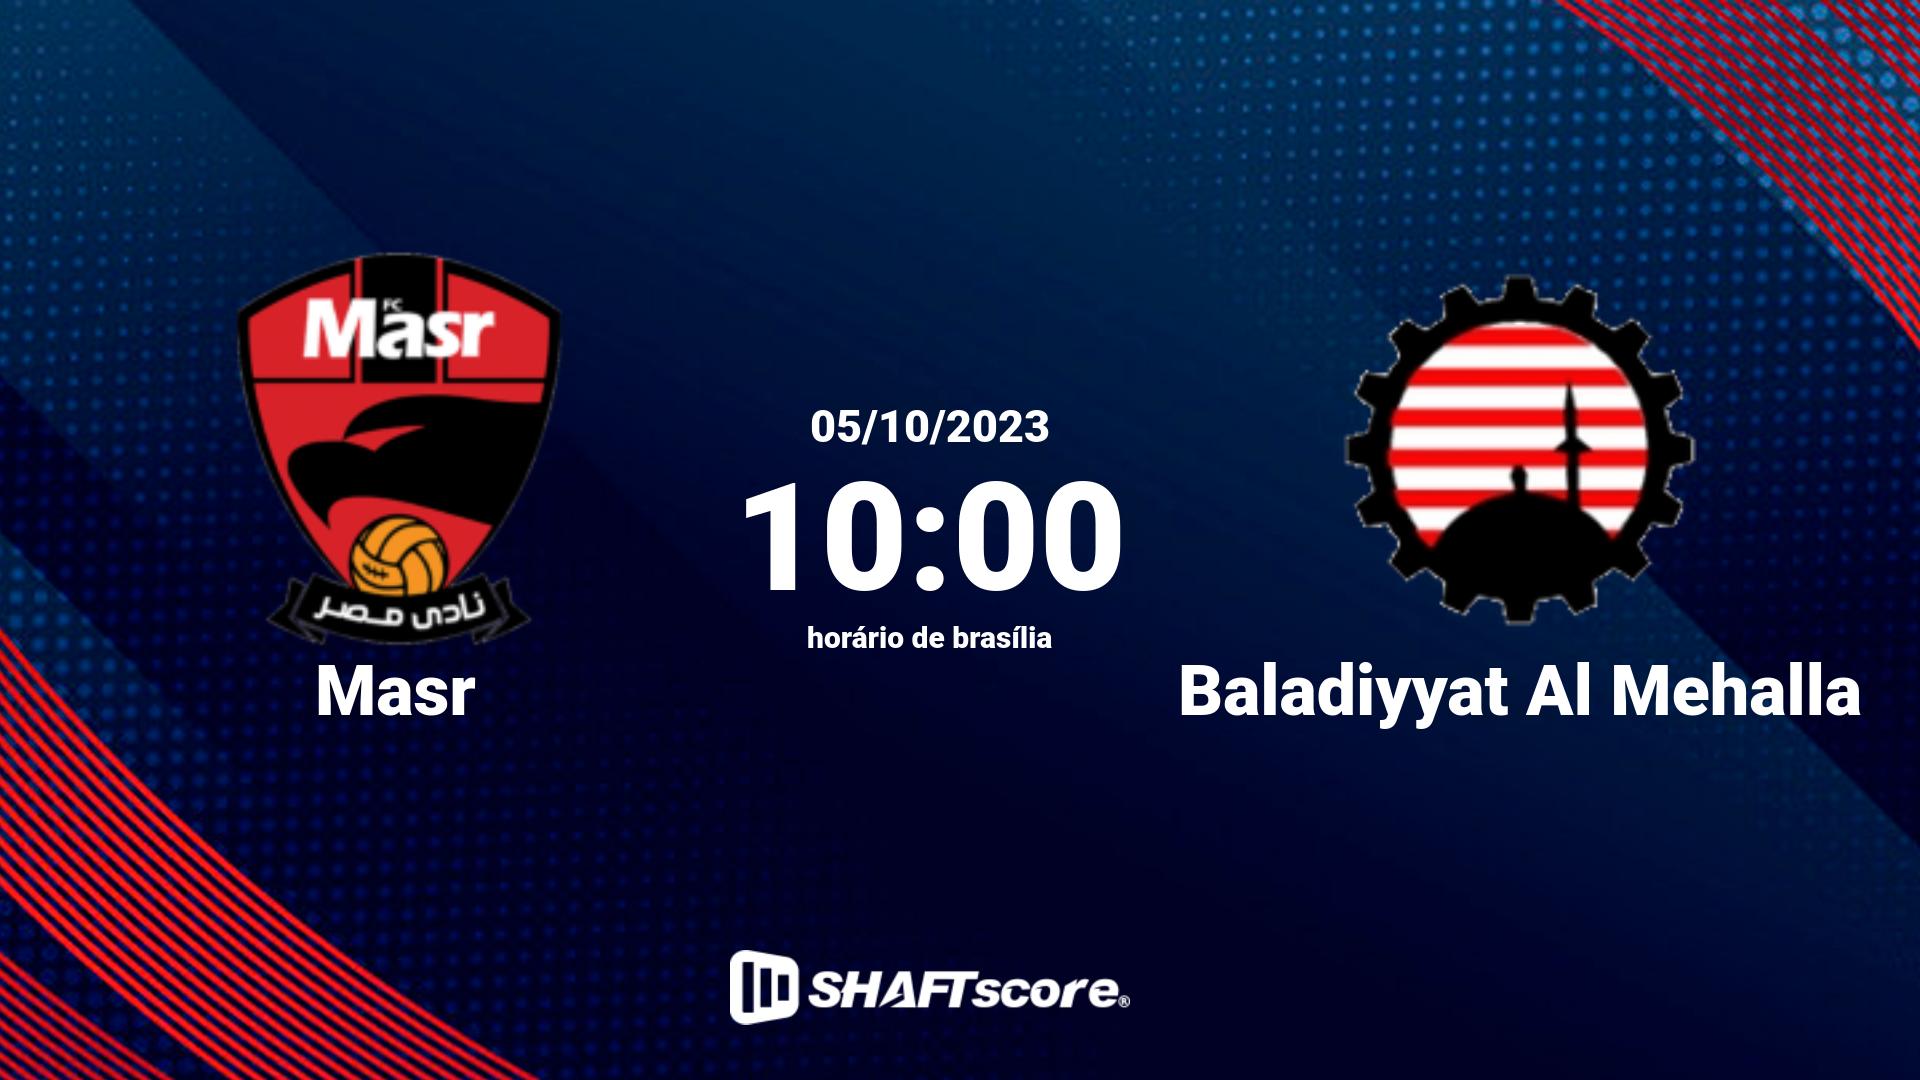 Estatísticas do jogo Masr vs Baladiyyat Al Mehalla 05.10 10:00